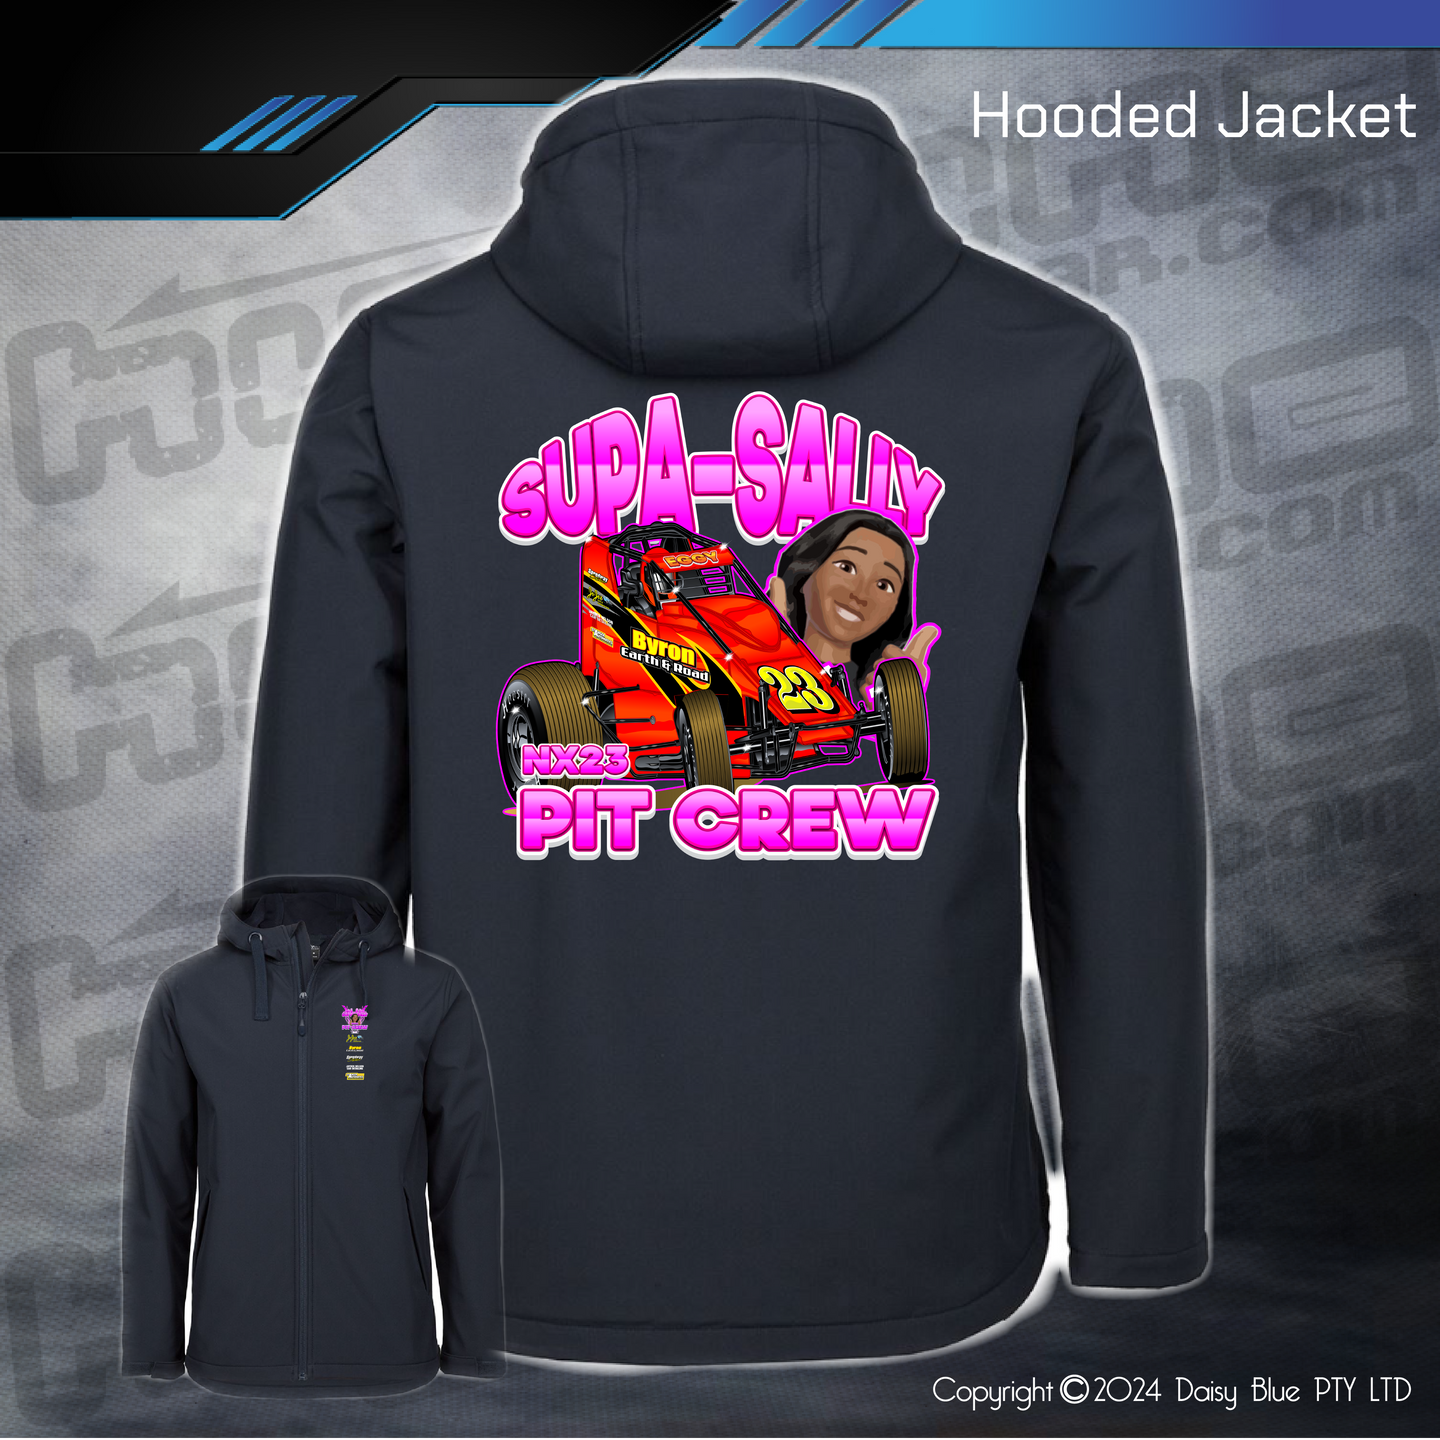 Hooded Jacket - Supa-Sally